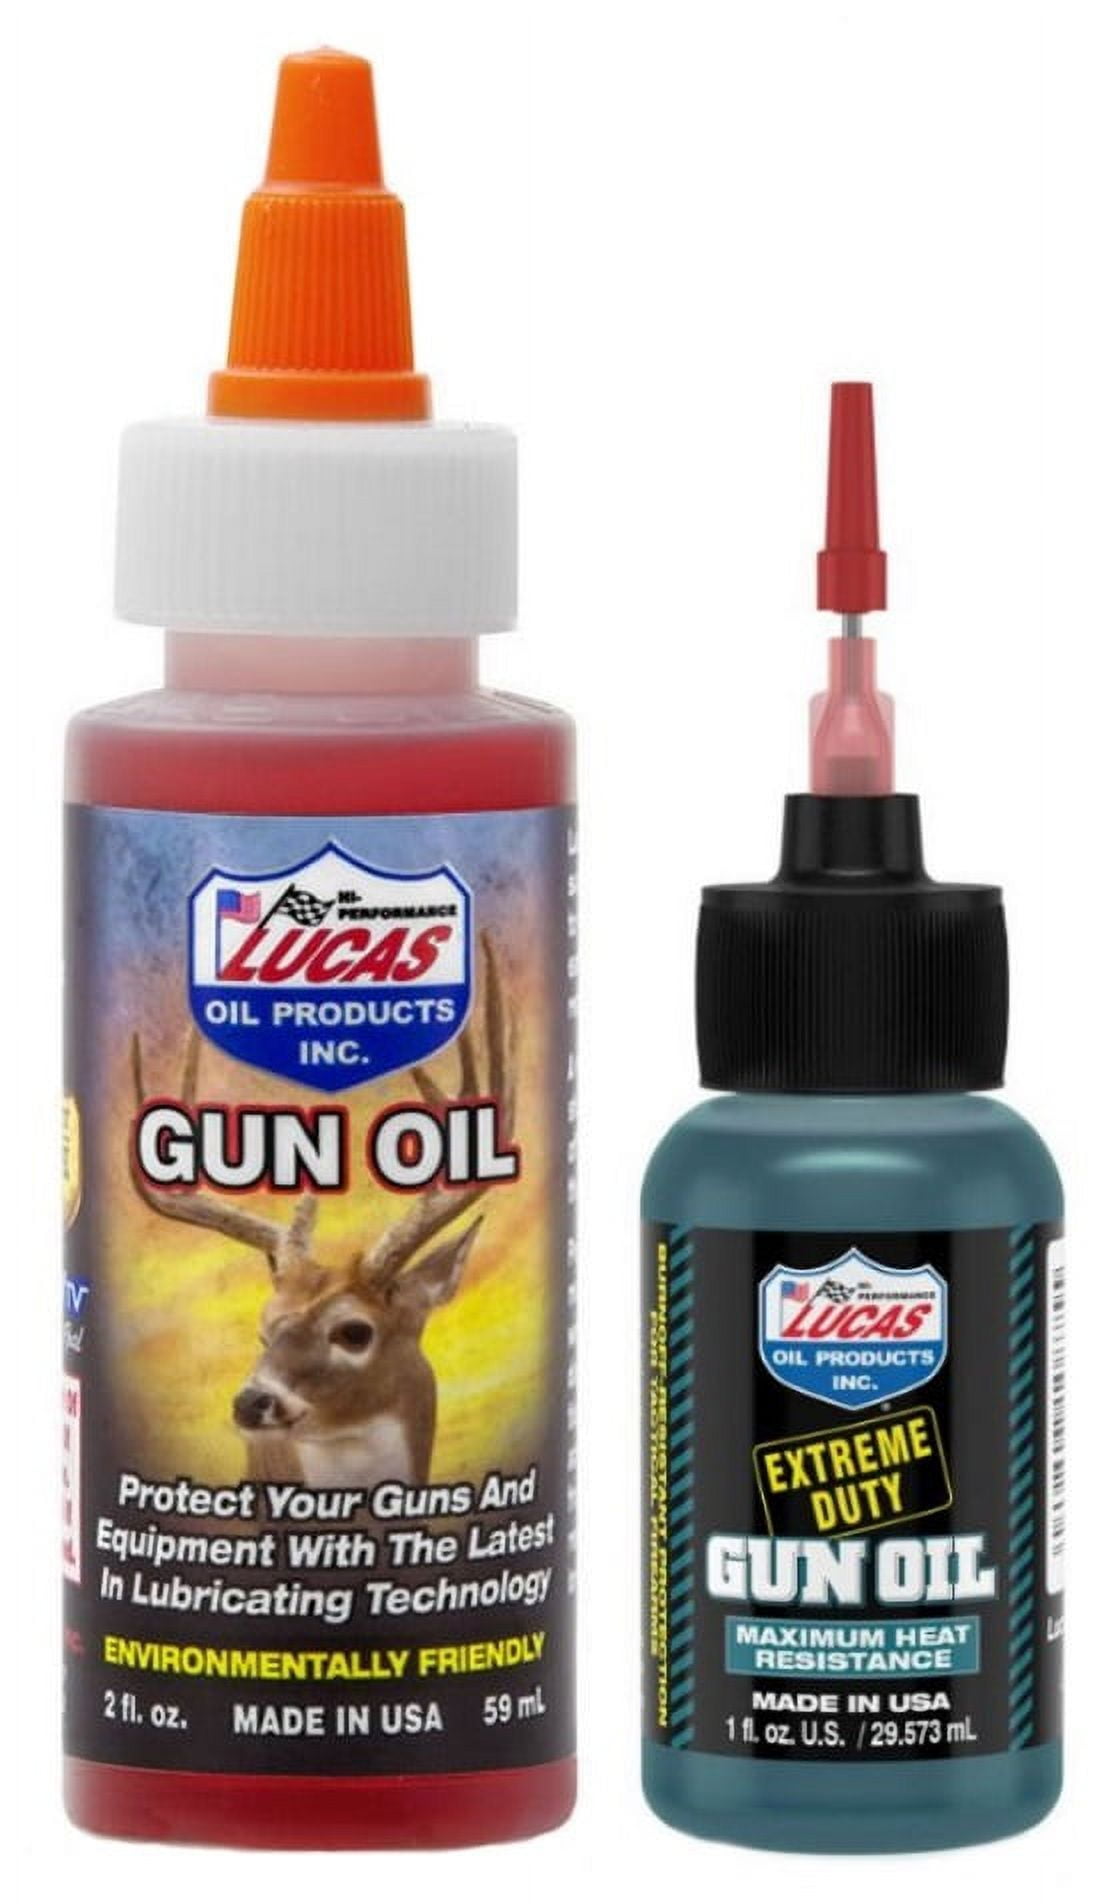  Lucas Oil Extreme Duty Gun Oil 8 oz - 10870 : Sports & Outdoors